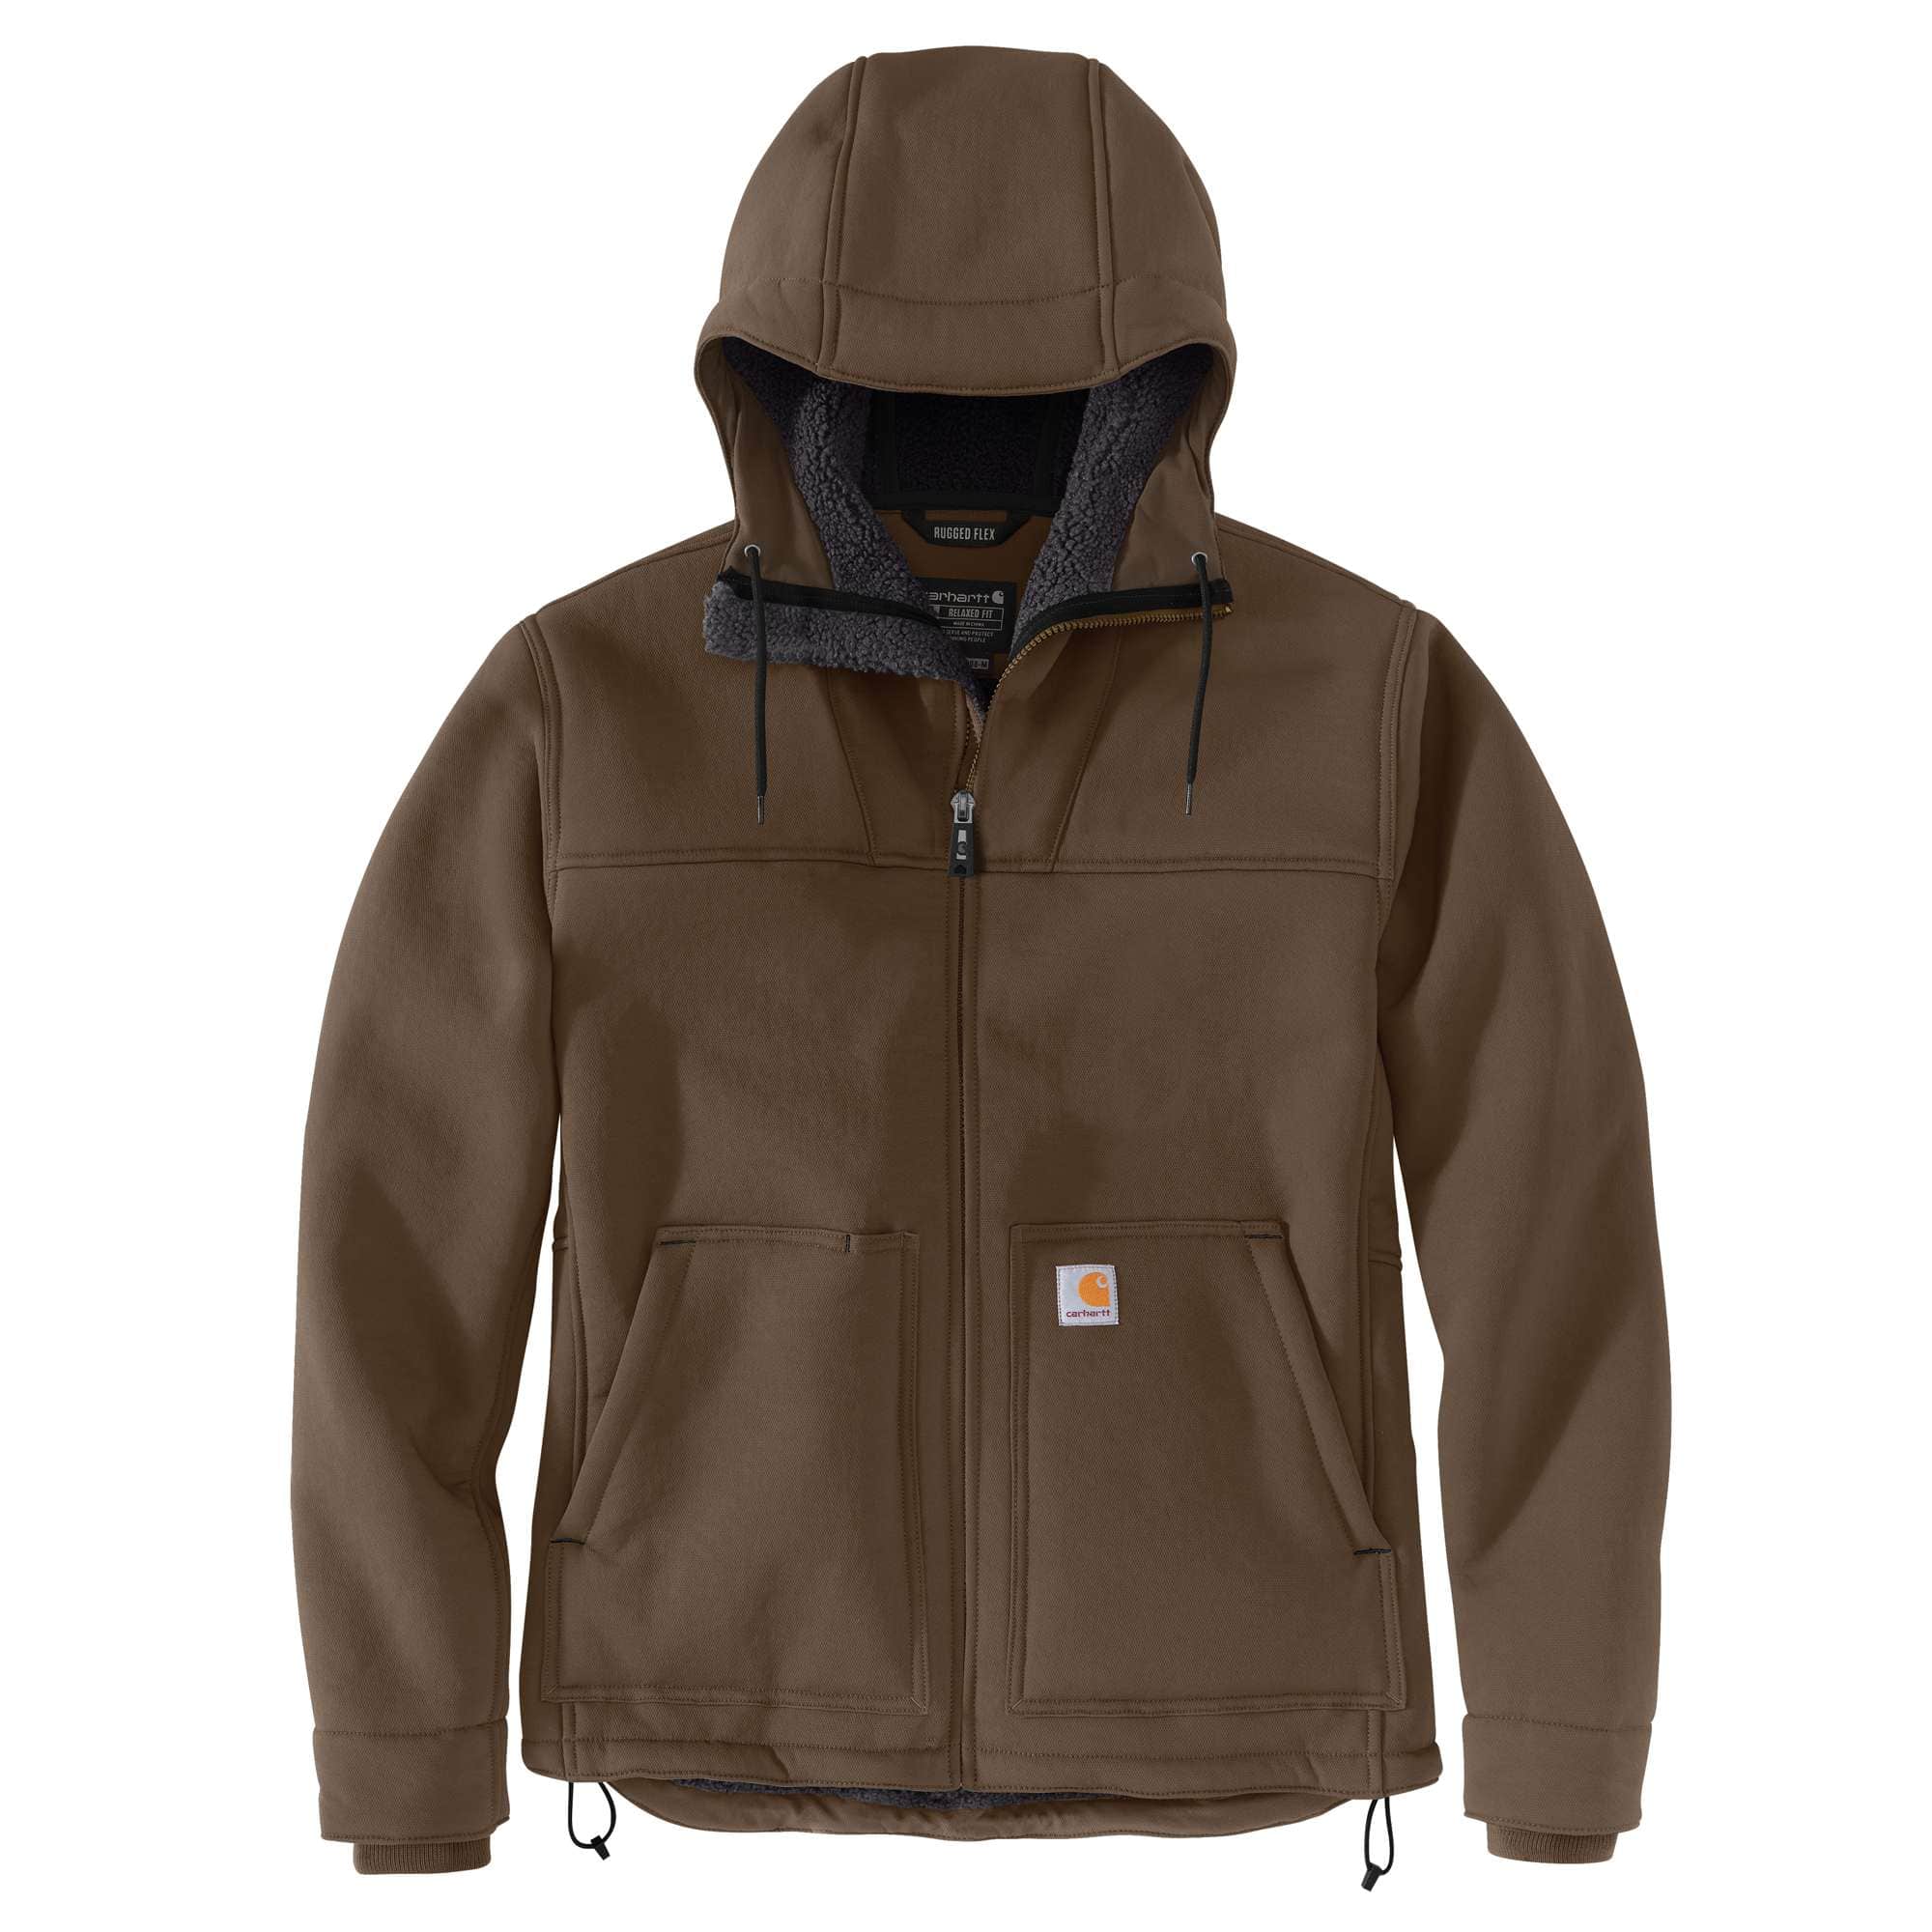 Men's Coats & Work Jackets | Carhartt